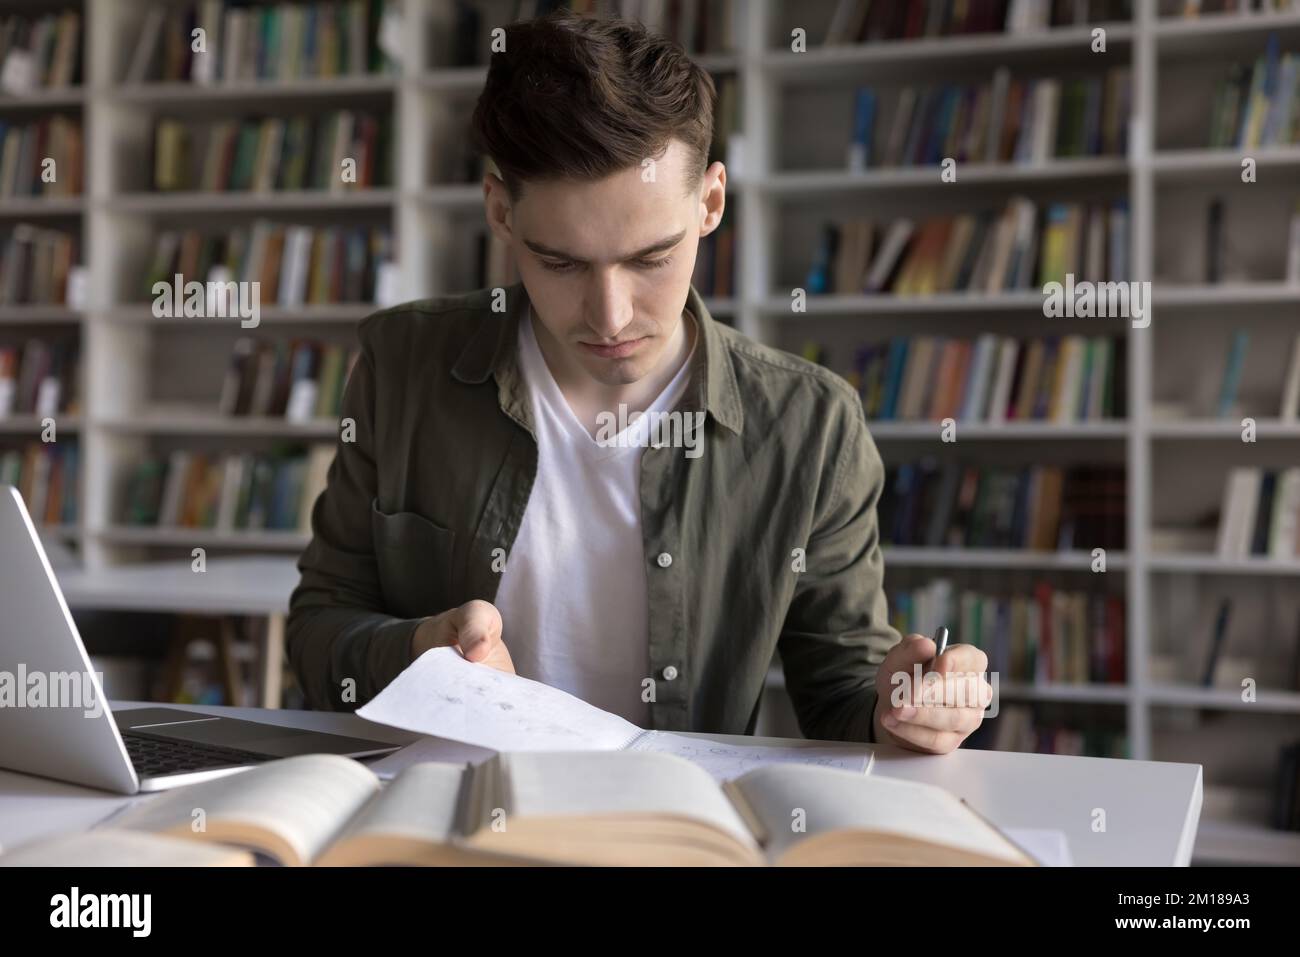 Focused serious student guy writing webinar summary, reading notes Stock Photo